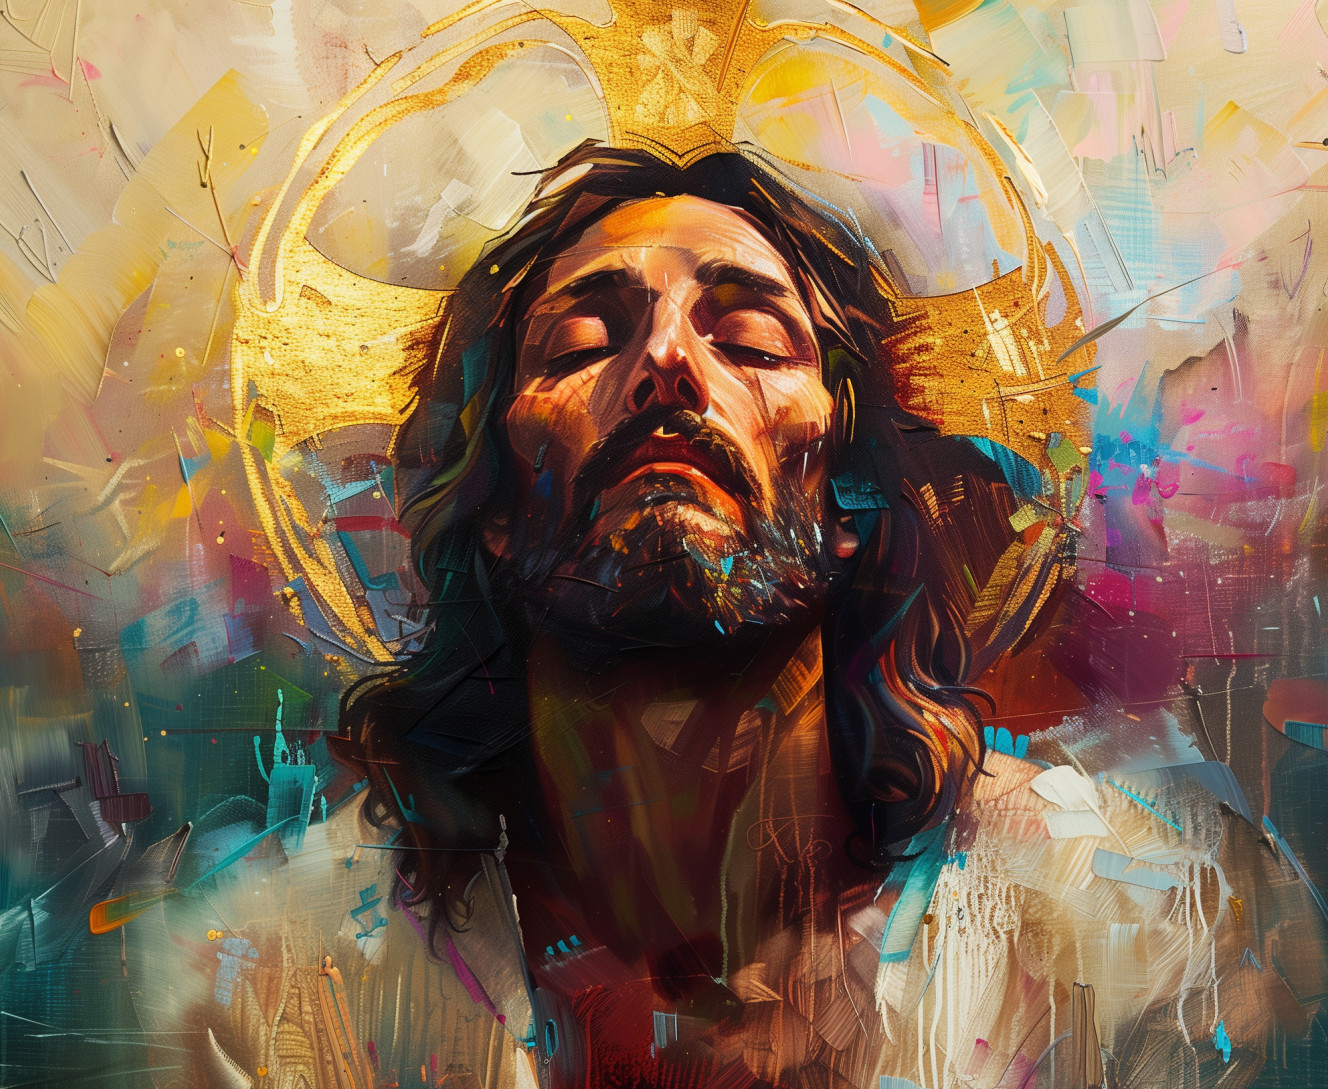 Illustration of Jesus Christ